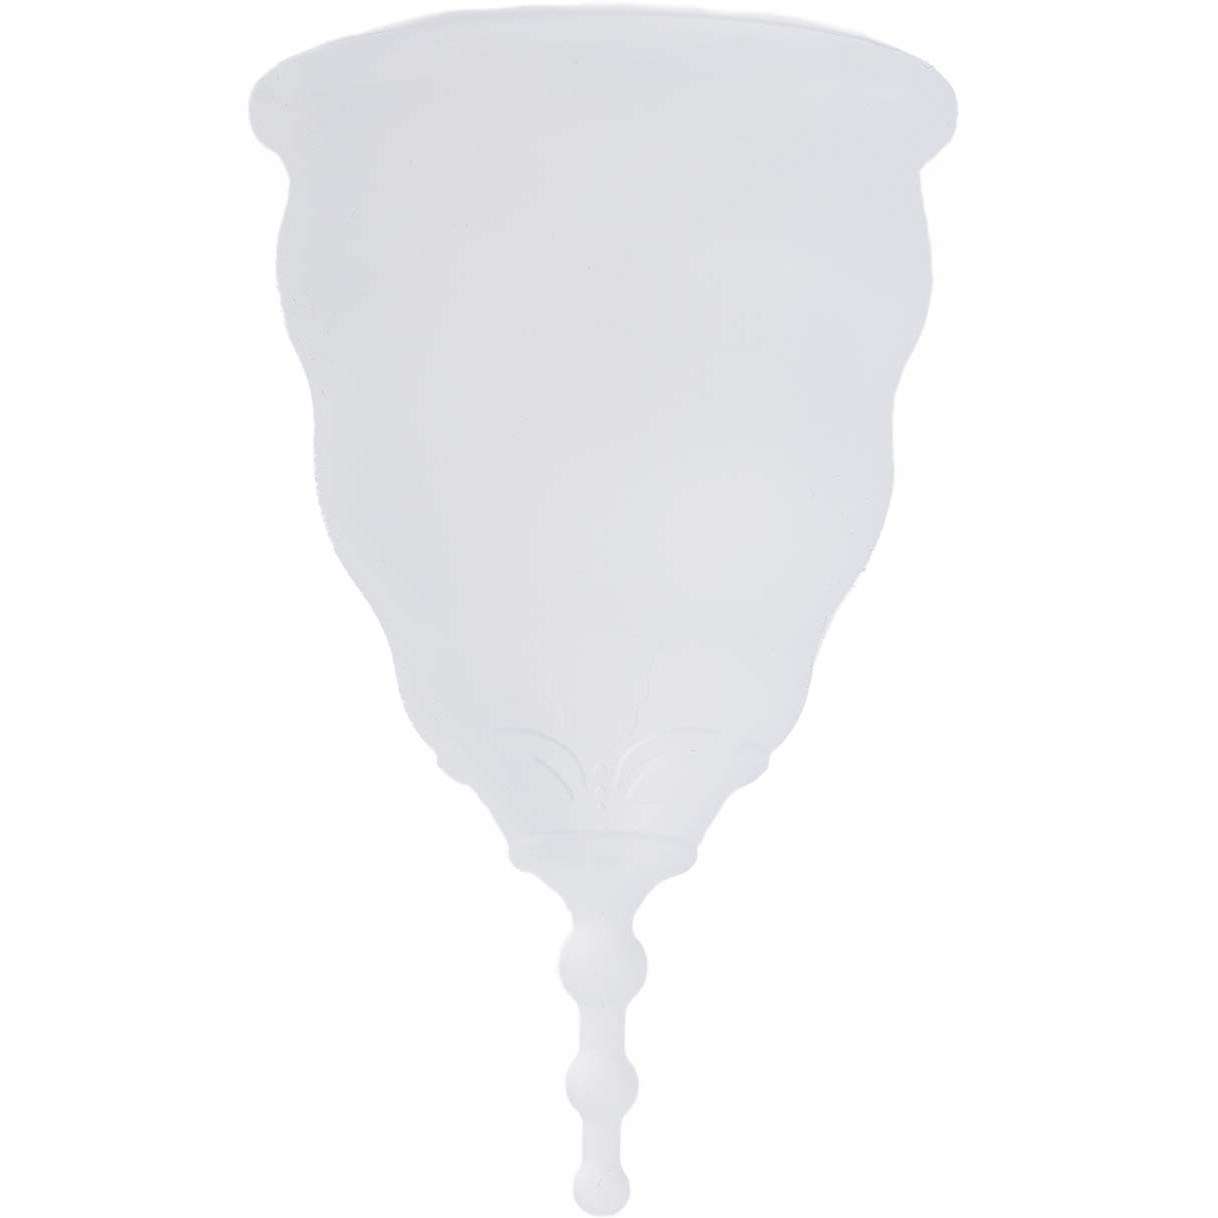 Bilde av Cleancup Menstrual Cup Soft Large